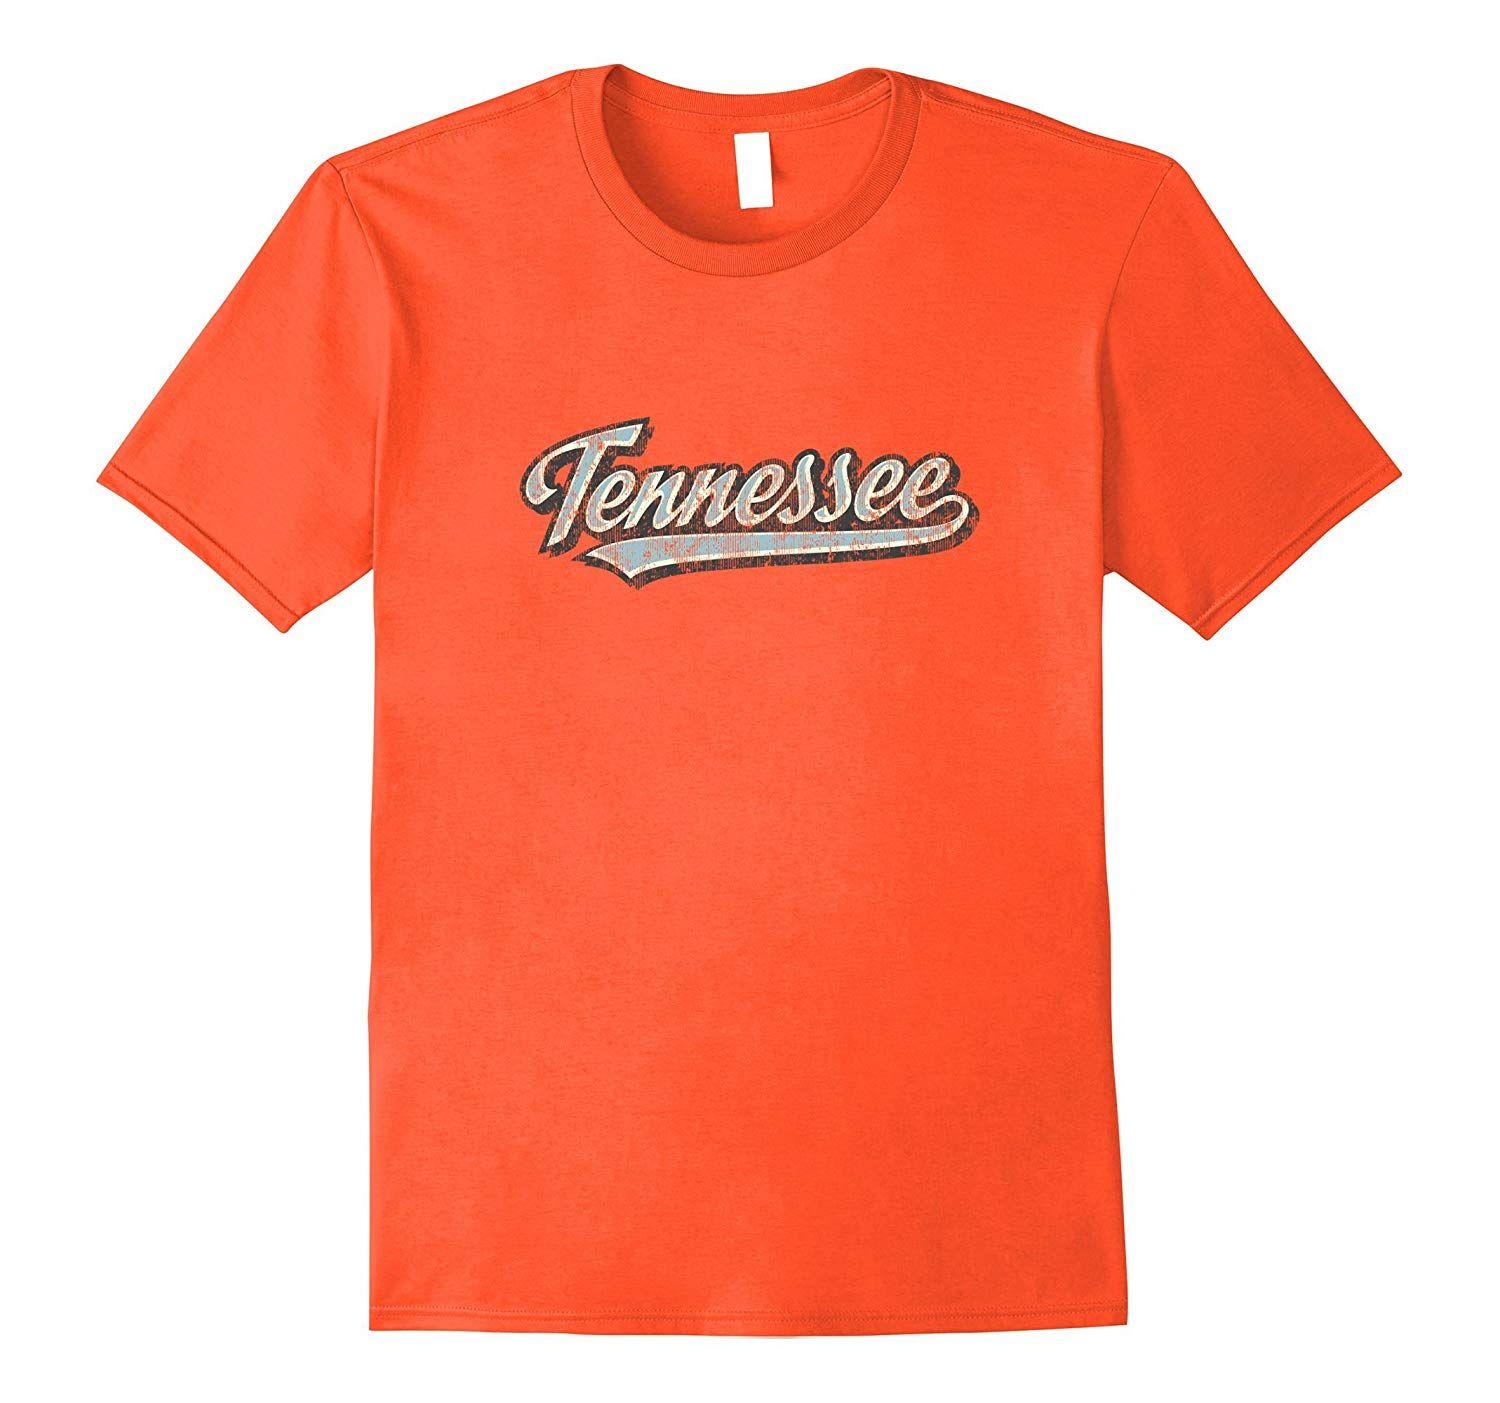 Retro Sports Tennessee Orange Logo - Retro Tennessee T Shirt Vintage Sports Tee Design ANZ